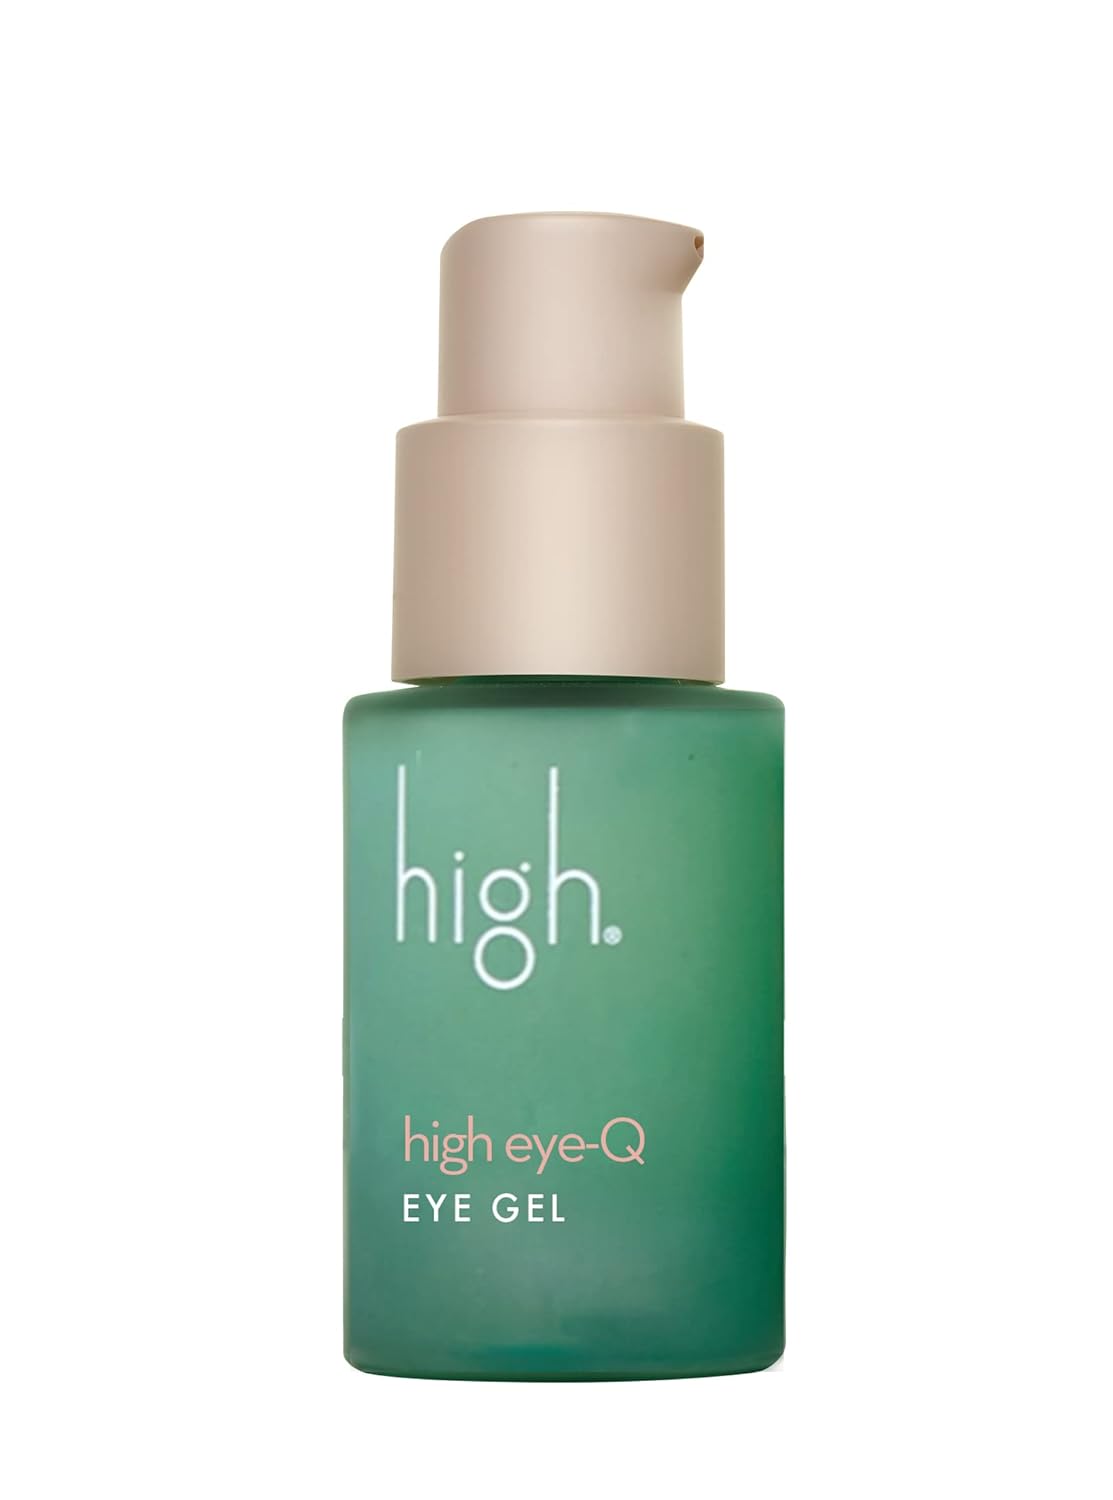 HIGH Beauty eye-Q EYE GEL | Hemp Seed Oil, Hyaluronic Acid | Smoothing, Hydrating & Cooling | Anti Aging Eye Gel | Depuffs, Brightens Dark Circles & Smooth Fine Lines | Paraben Free | 0.5